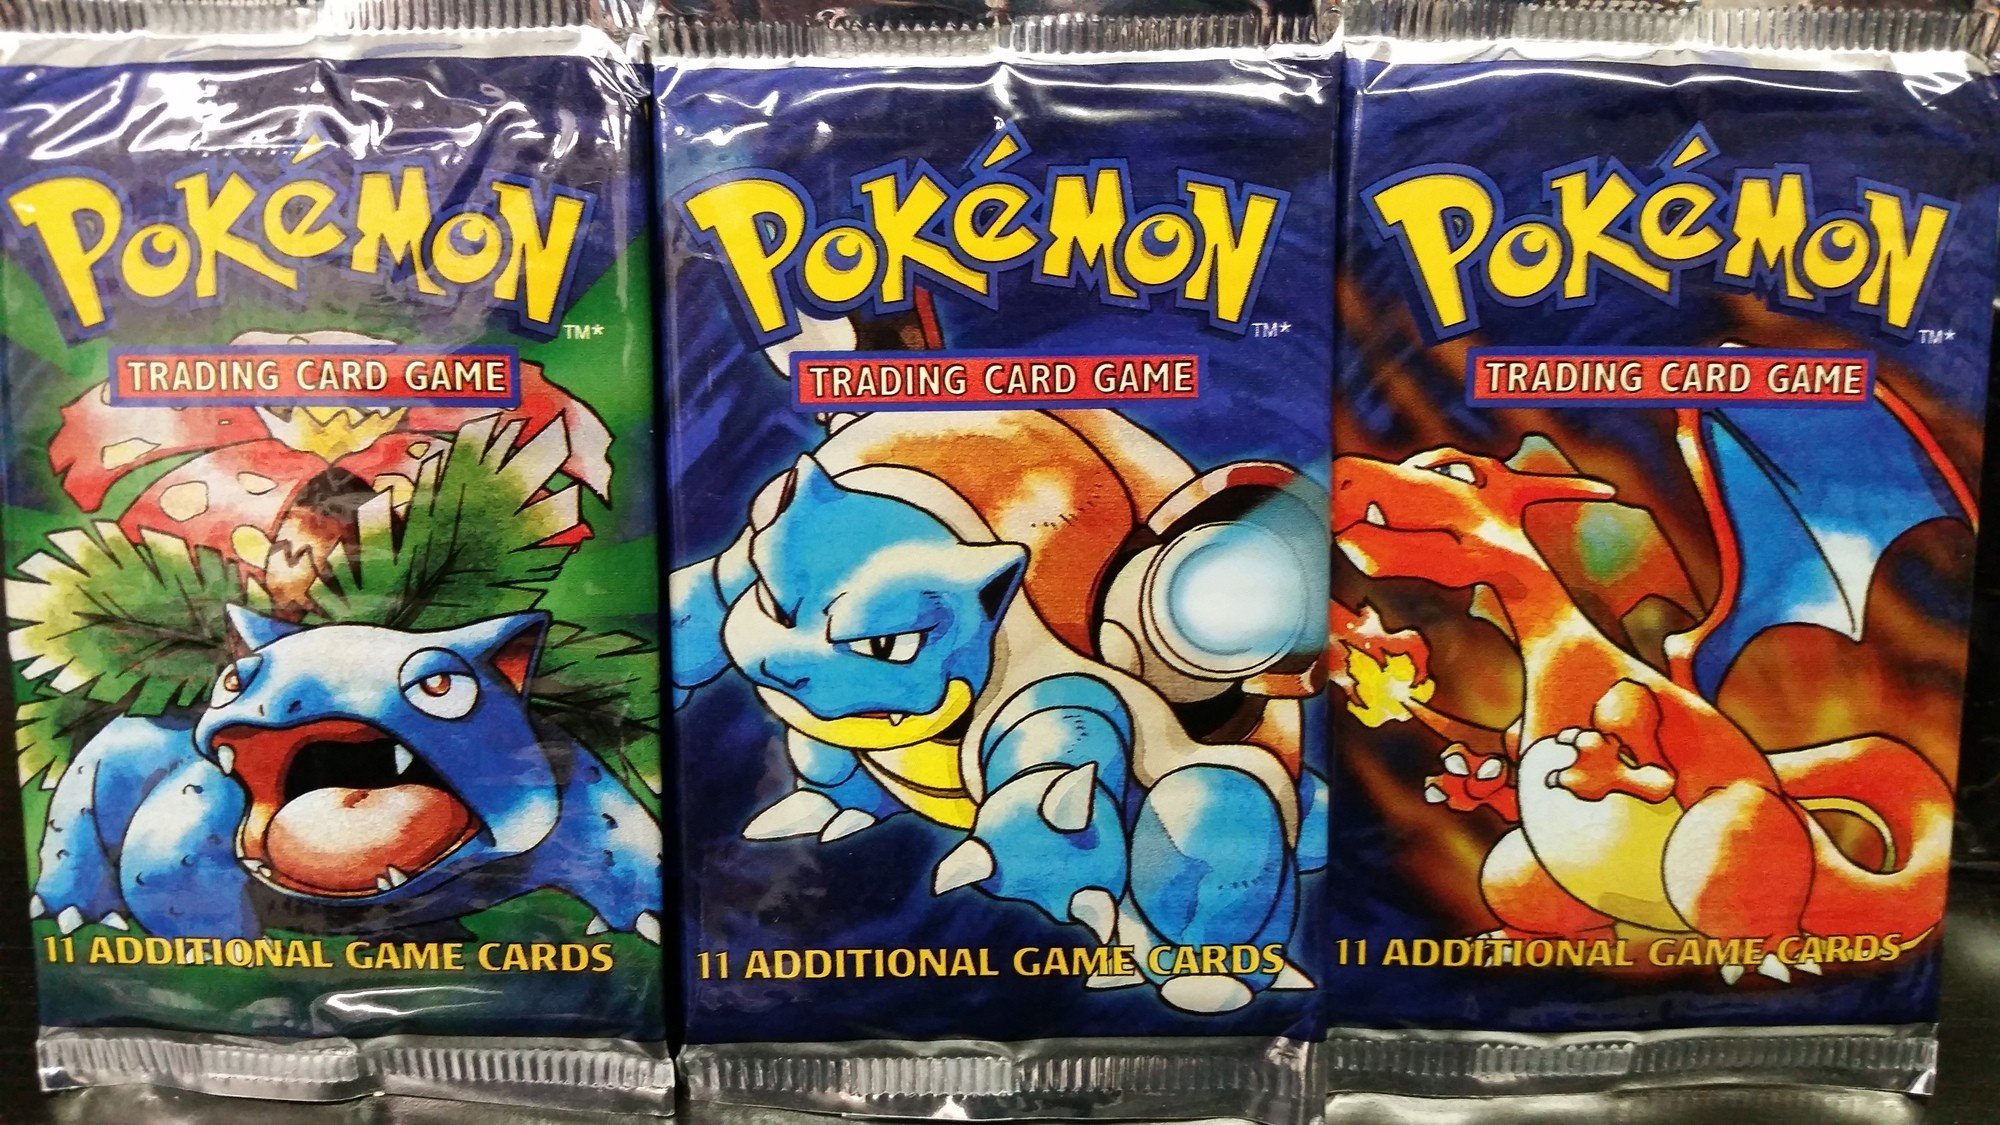 is the pokemon card game still popular